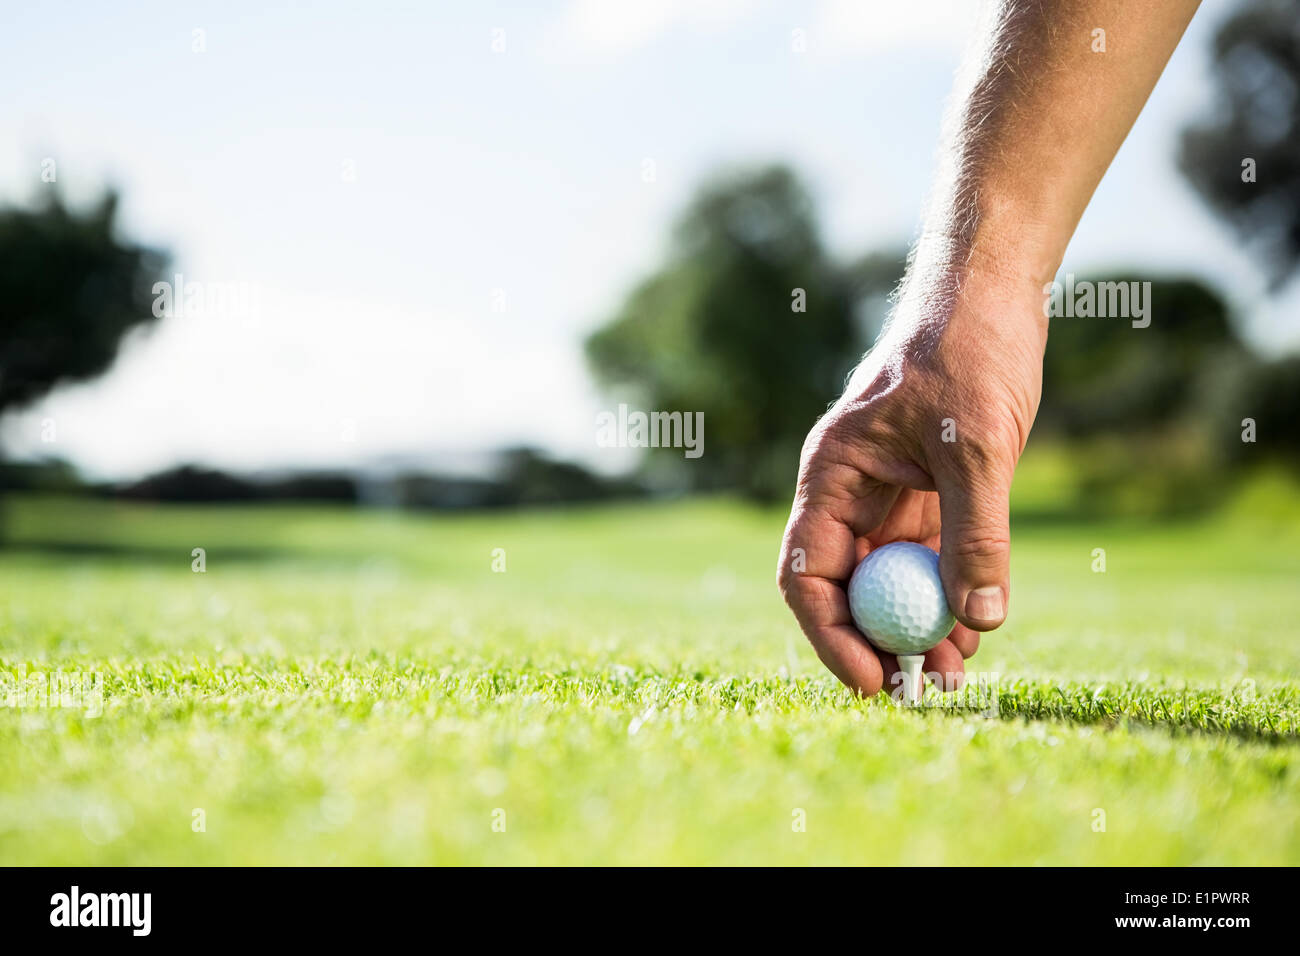 Golfer placing golf ball on tee Stock Photo